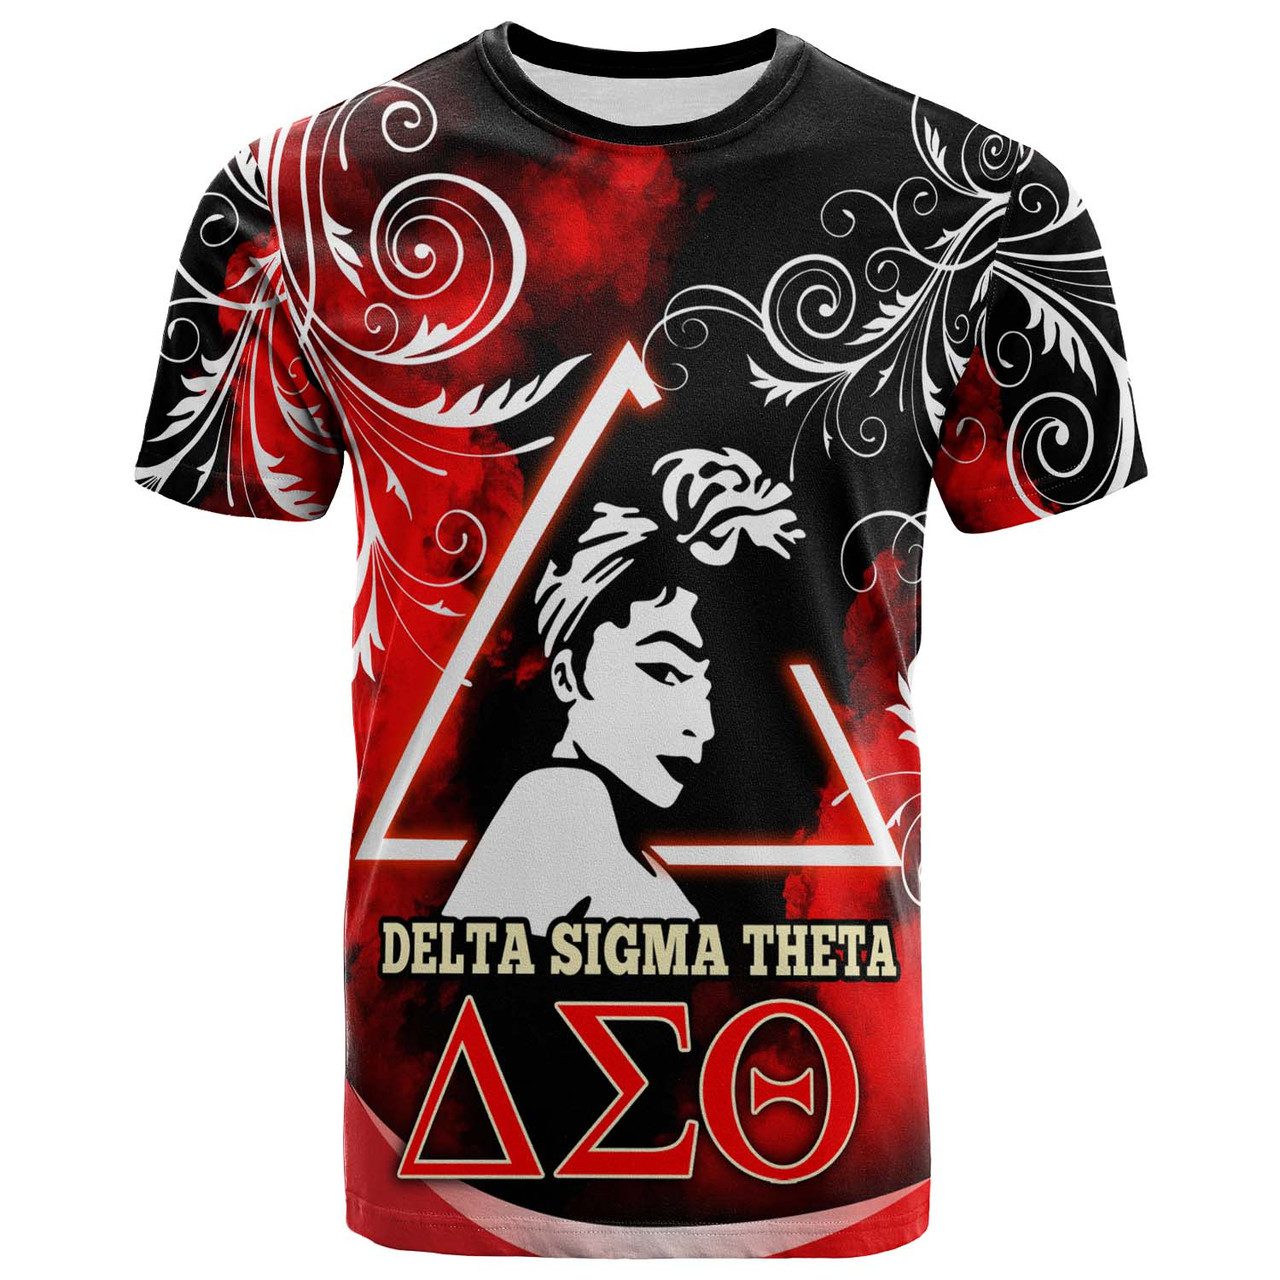 Delta Sigma Theta T-shirt – Sorority Delta Sigma Theta Pyramid Light and Quotes Vibes T-shirt